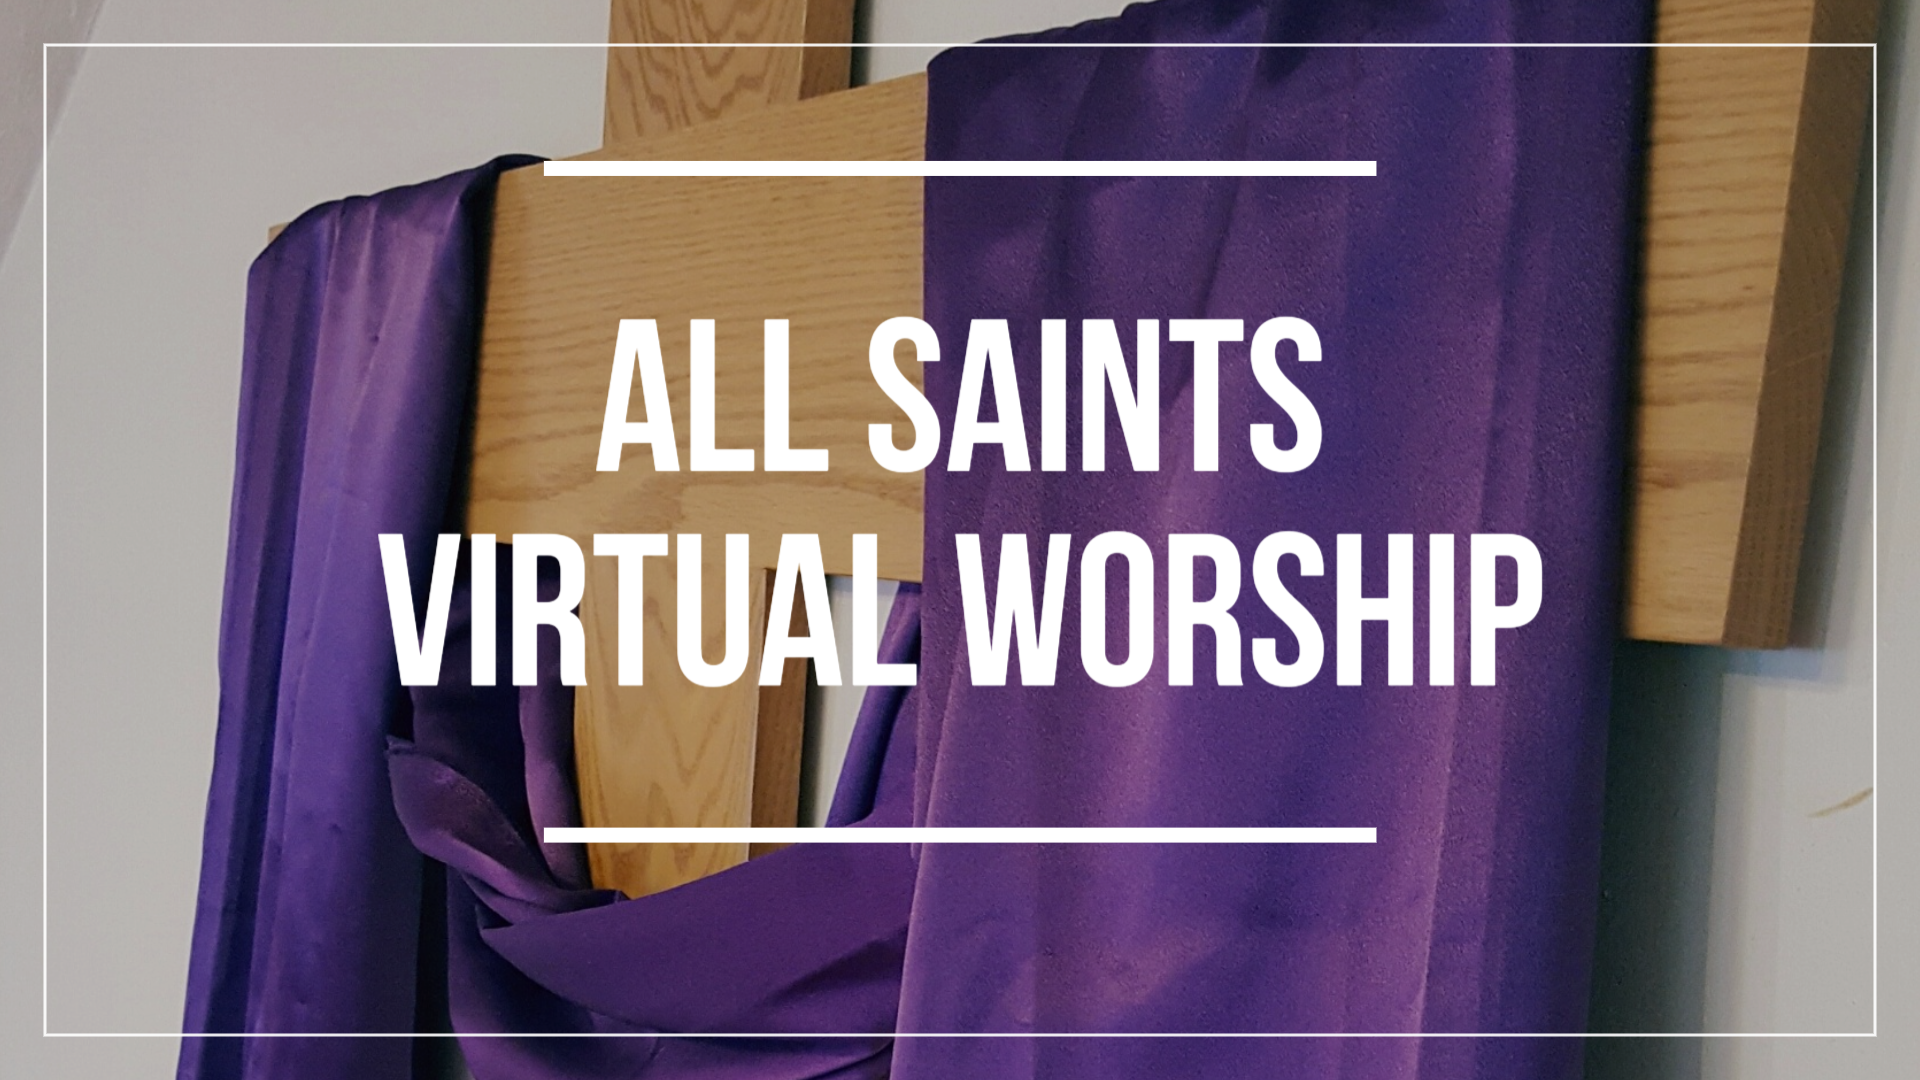 All Saints Virtual Worship - A Witness